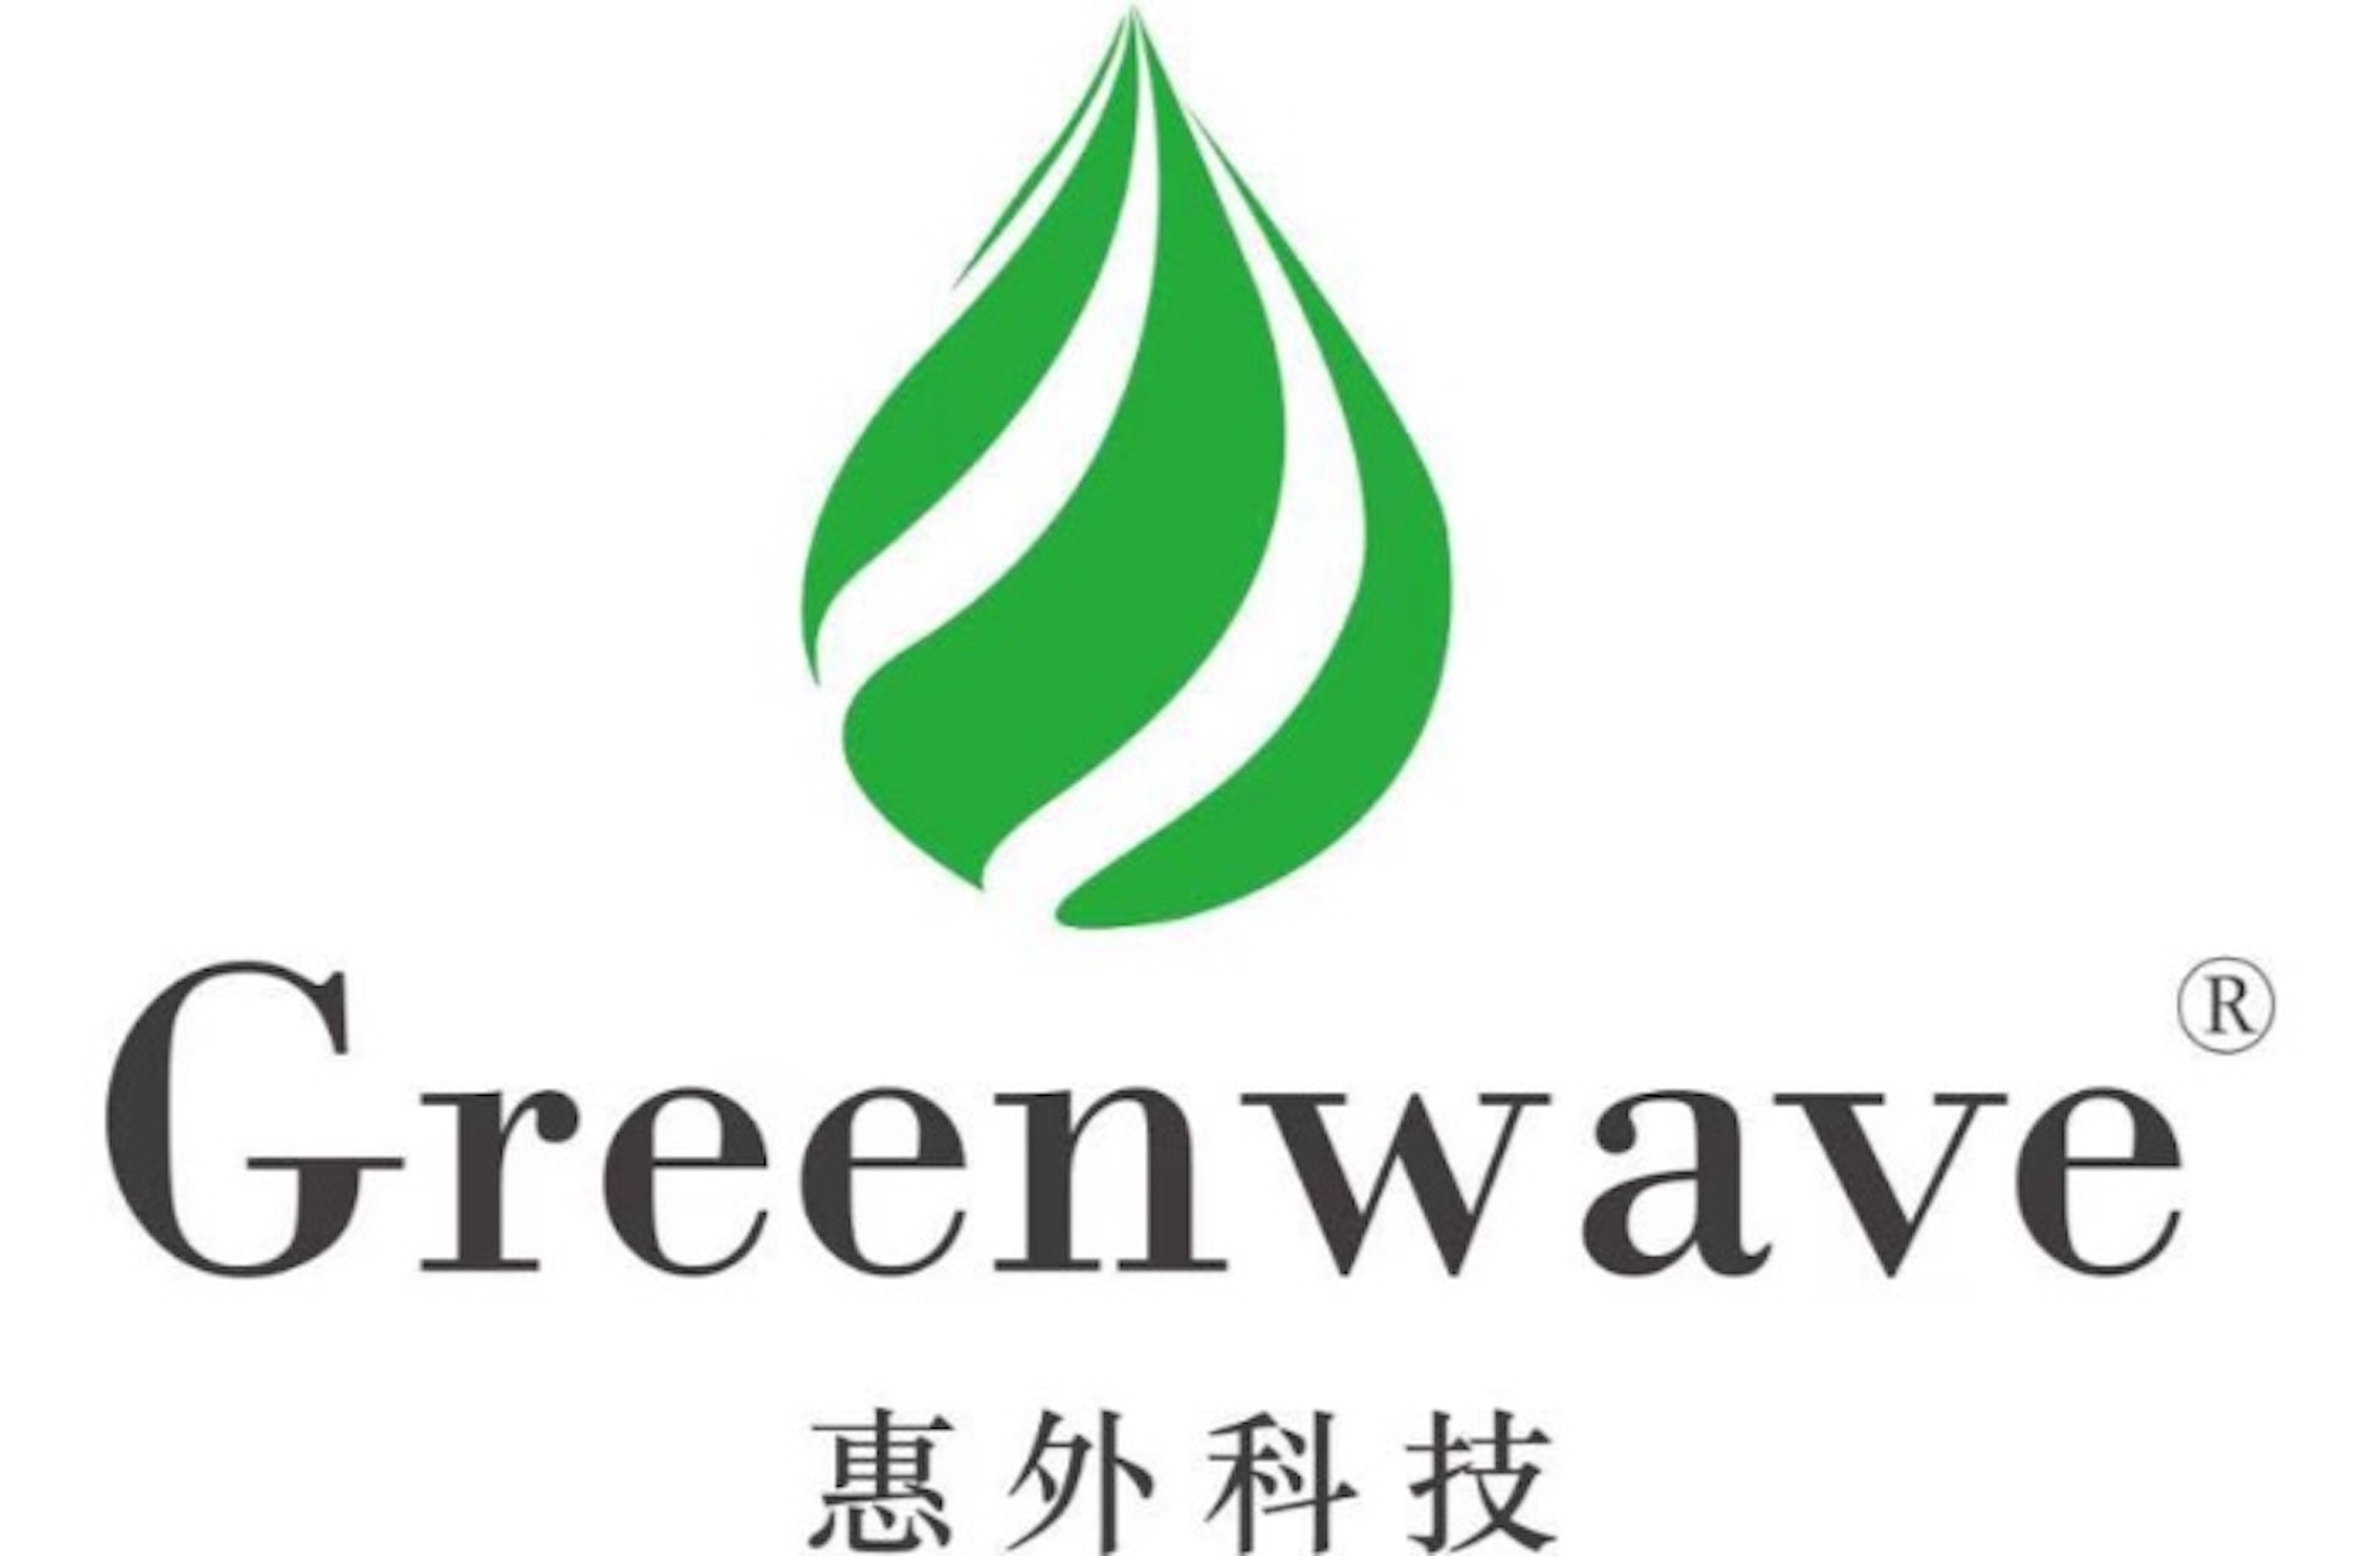 Greenwave-logo.-Image-via-Greenwave.jpg